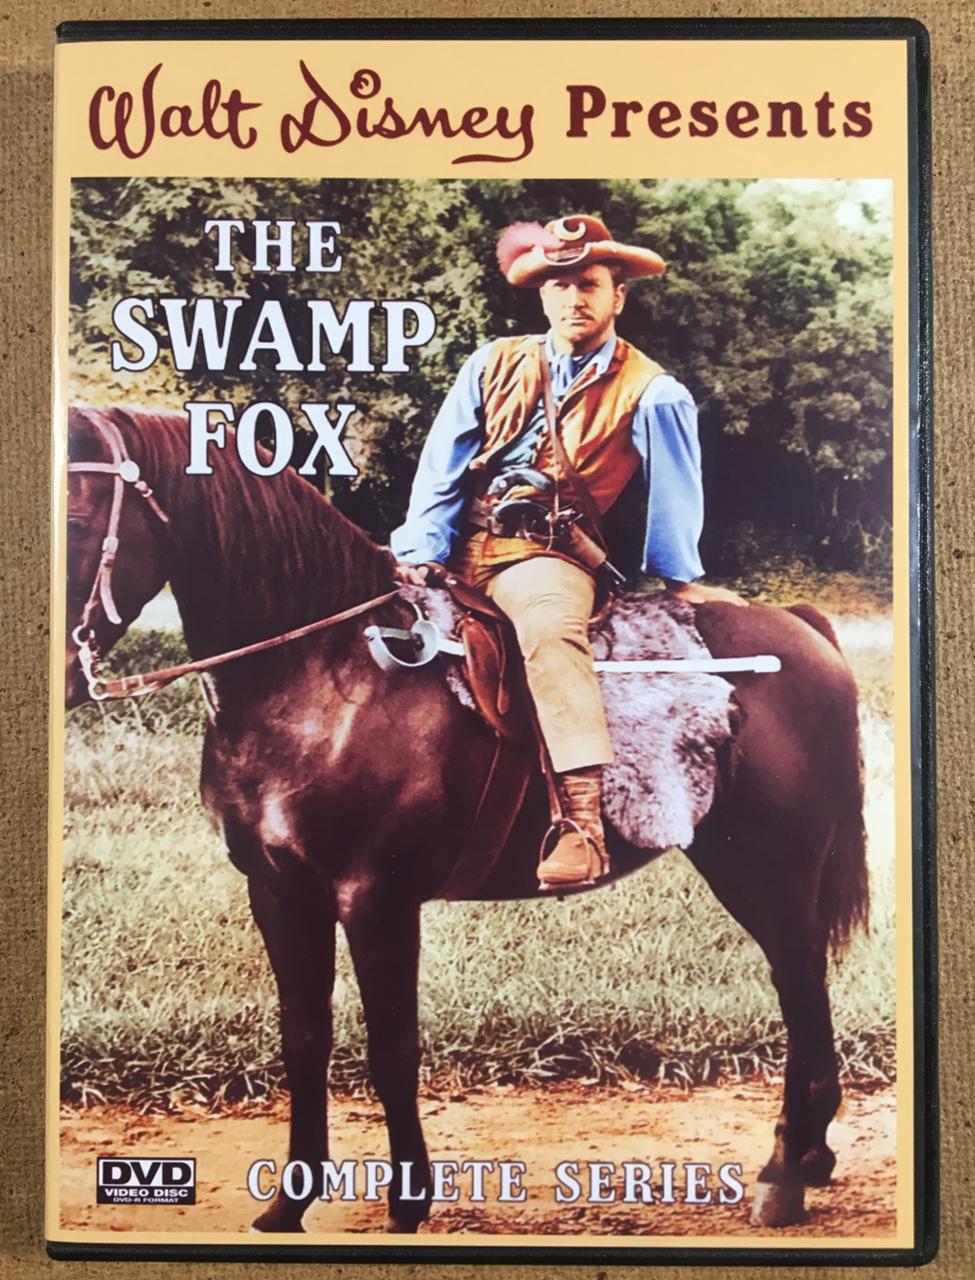 SWAMP FOX (Entire Series) - DVD - warshows.com